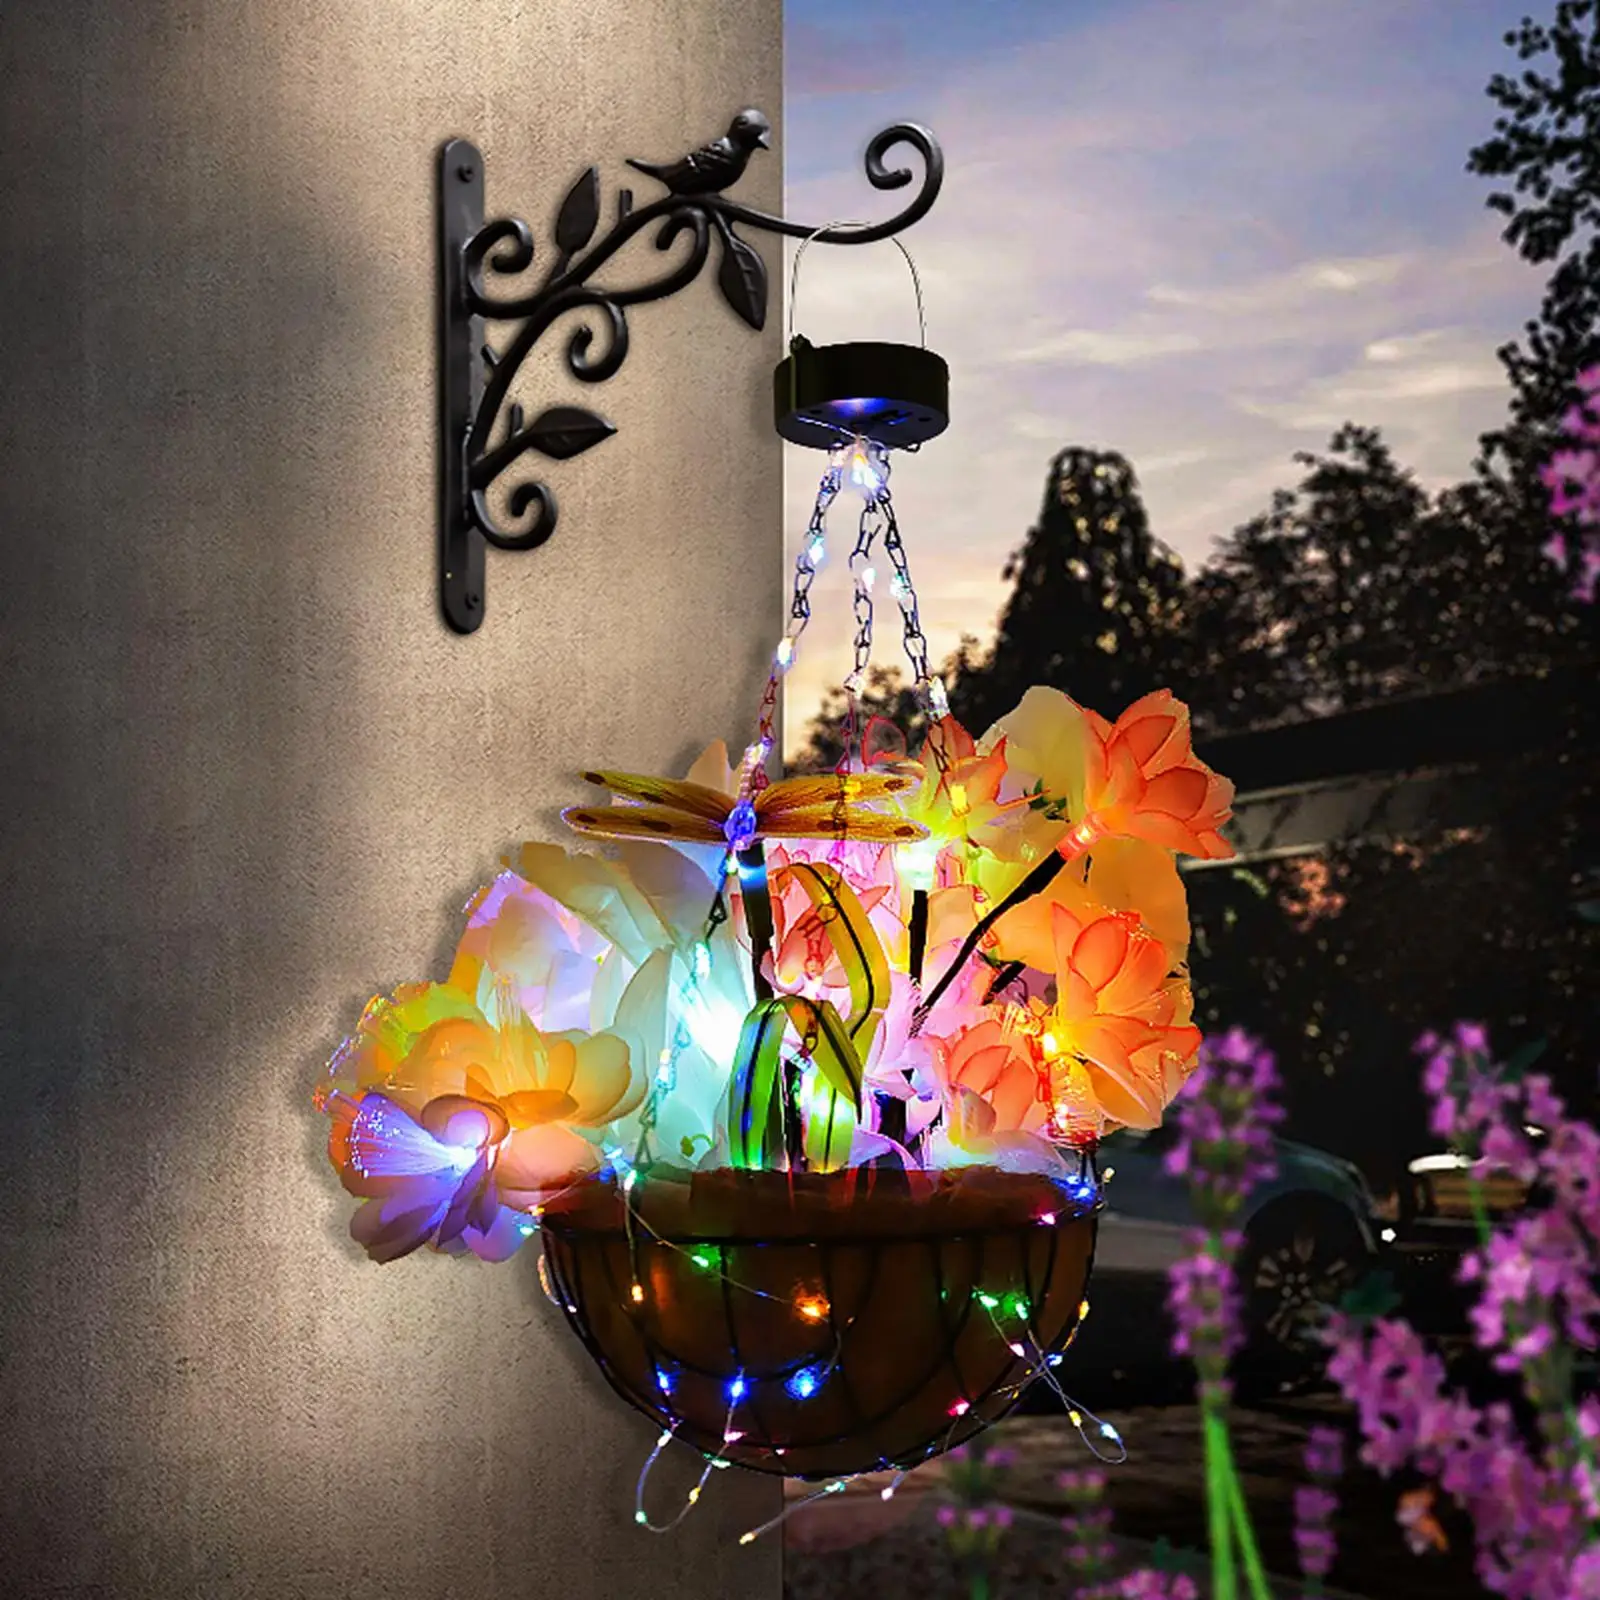 Hanging Basket Lights Pendant Simulation Waterproof Solar Powered DIY Lamp for Garden Decoration Outdoor Tree